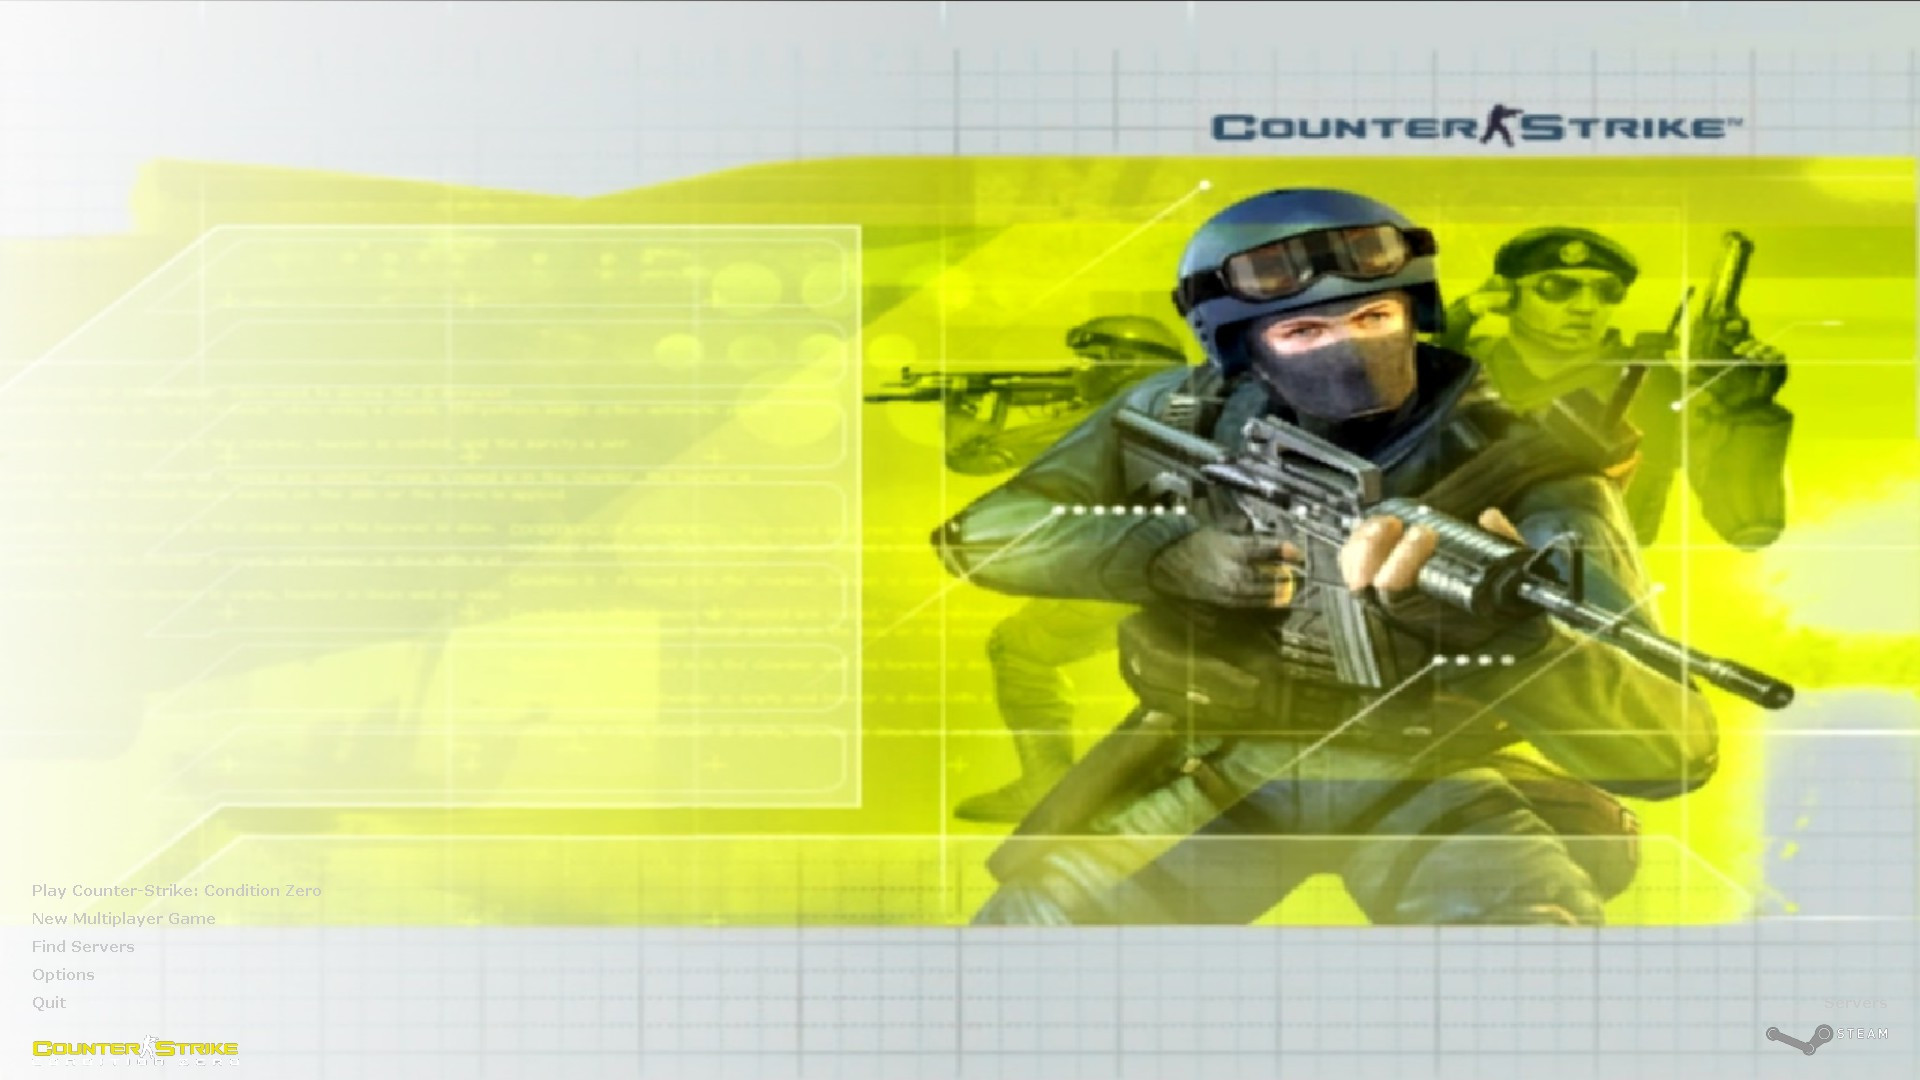 Counter-Strike Xbox Background and Theme [Counter-Strike: Condition Zero]  [Mods]